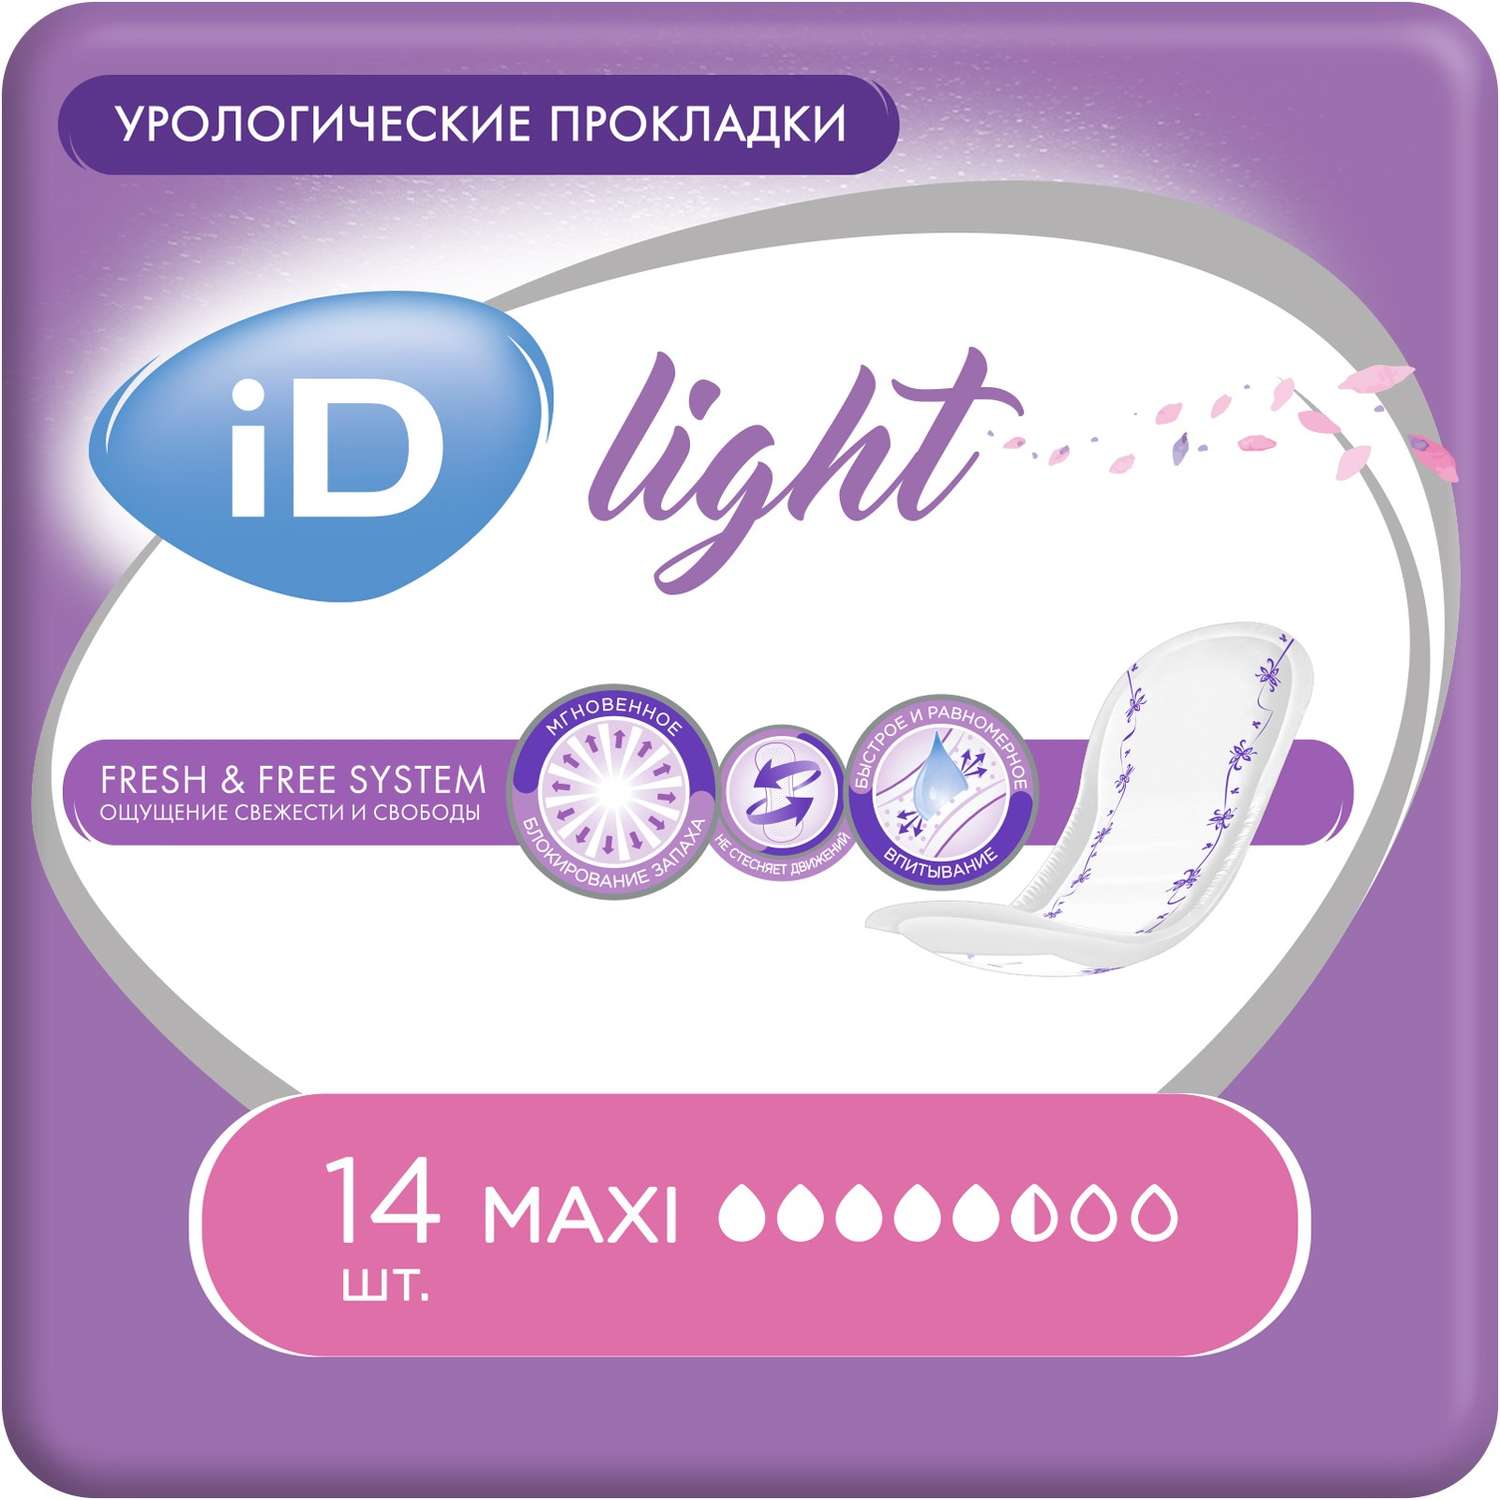 Прокладки урологические iD LIGHT Maxi 14 шт. х2 упаковки - фото 1